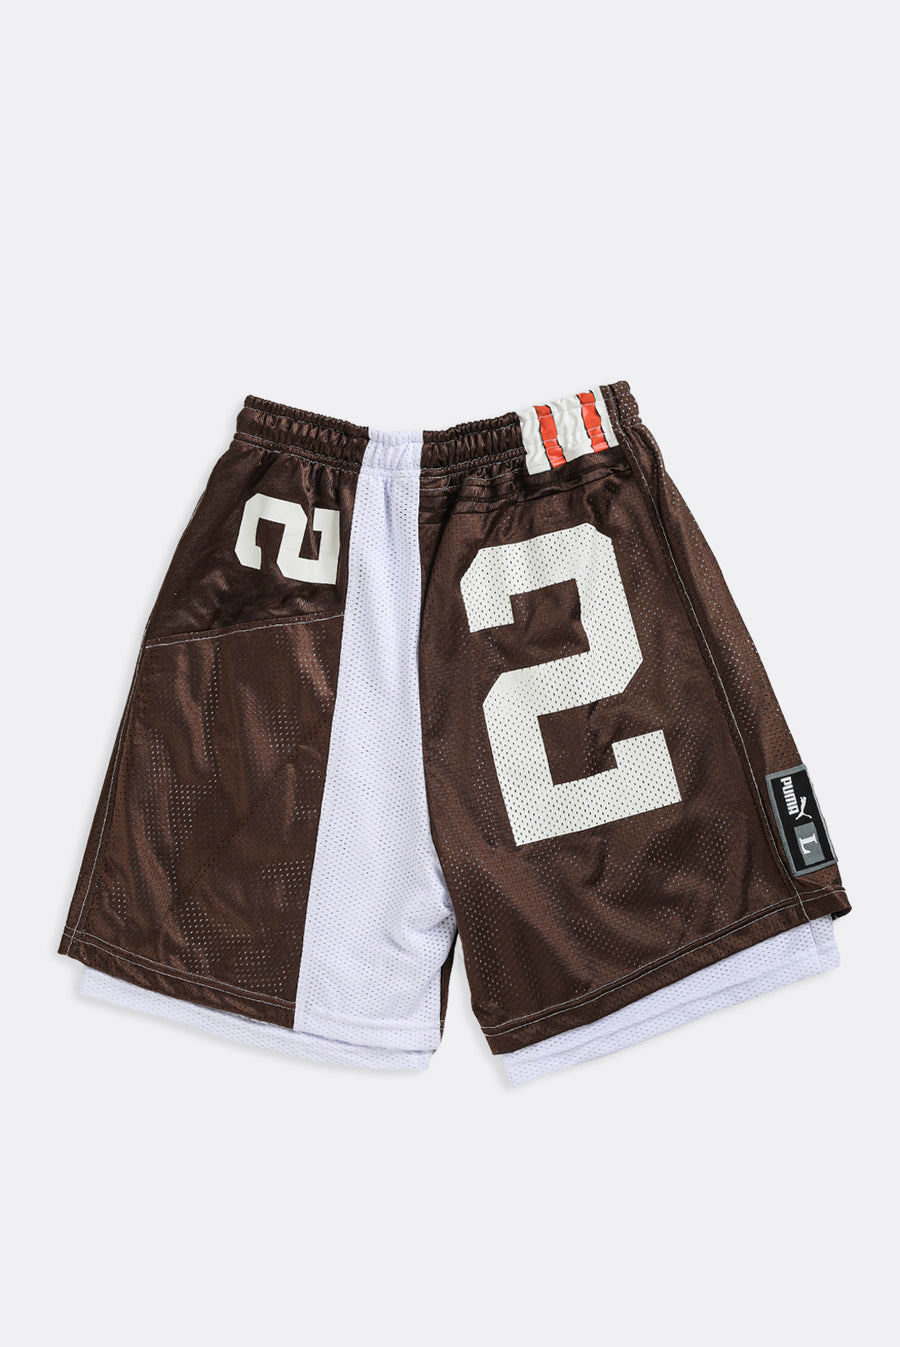 Unisex Rework Browns NFL Jersey Shorts - Women-S, Men-XS